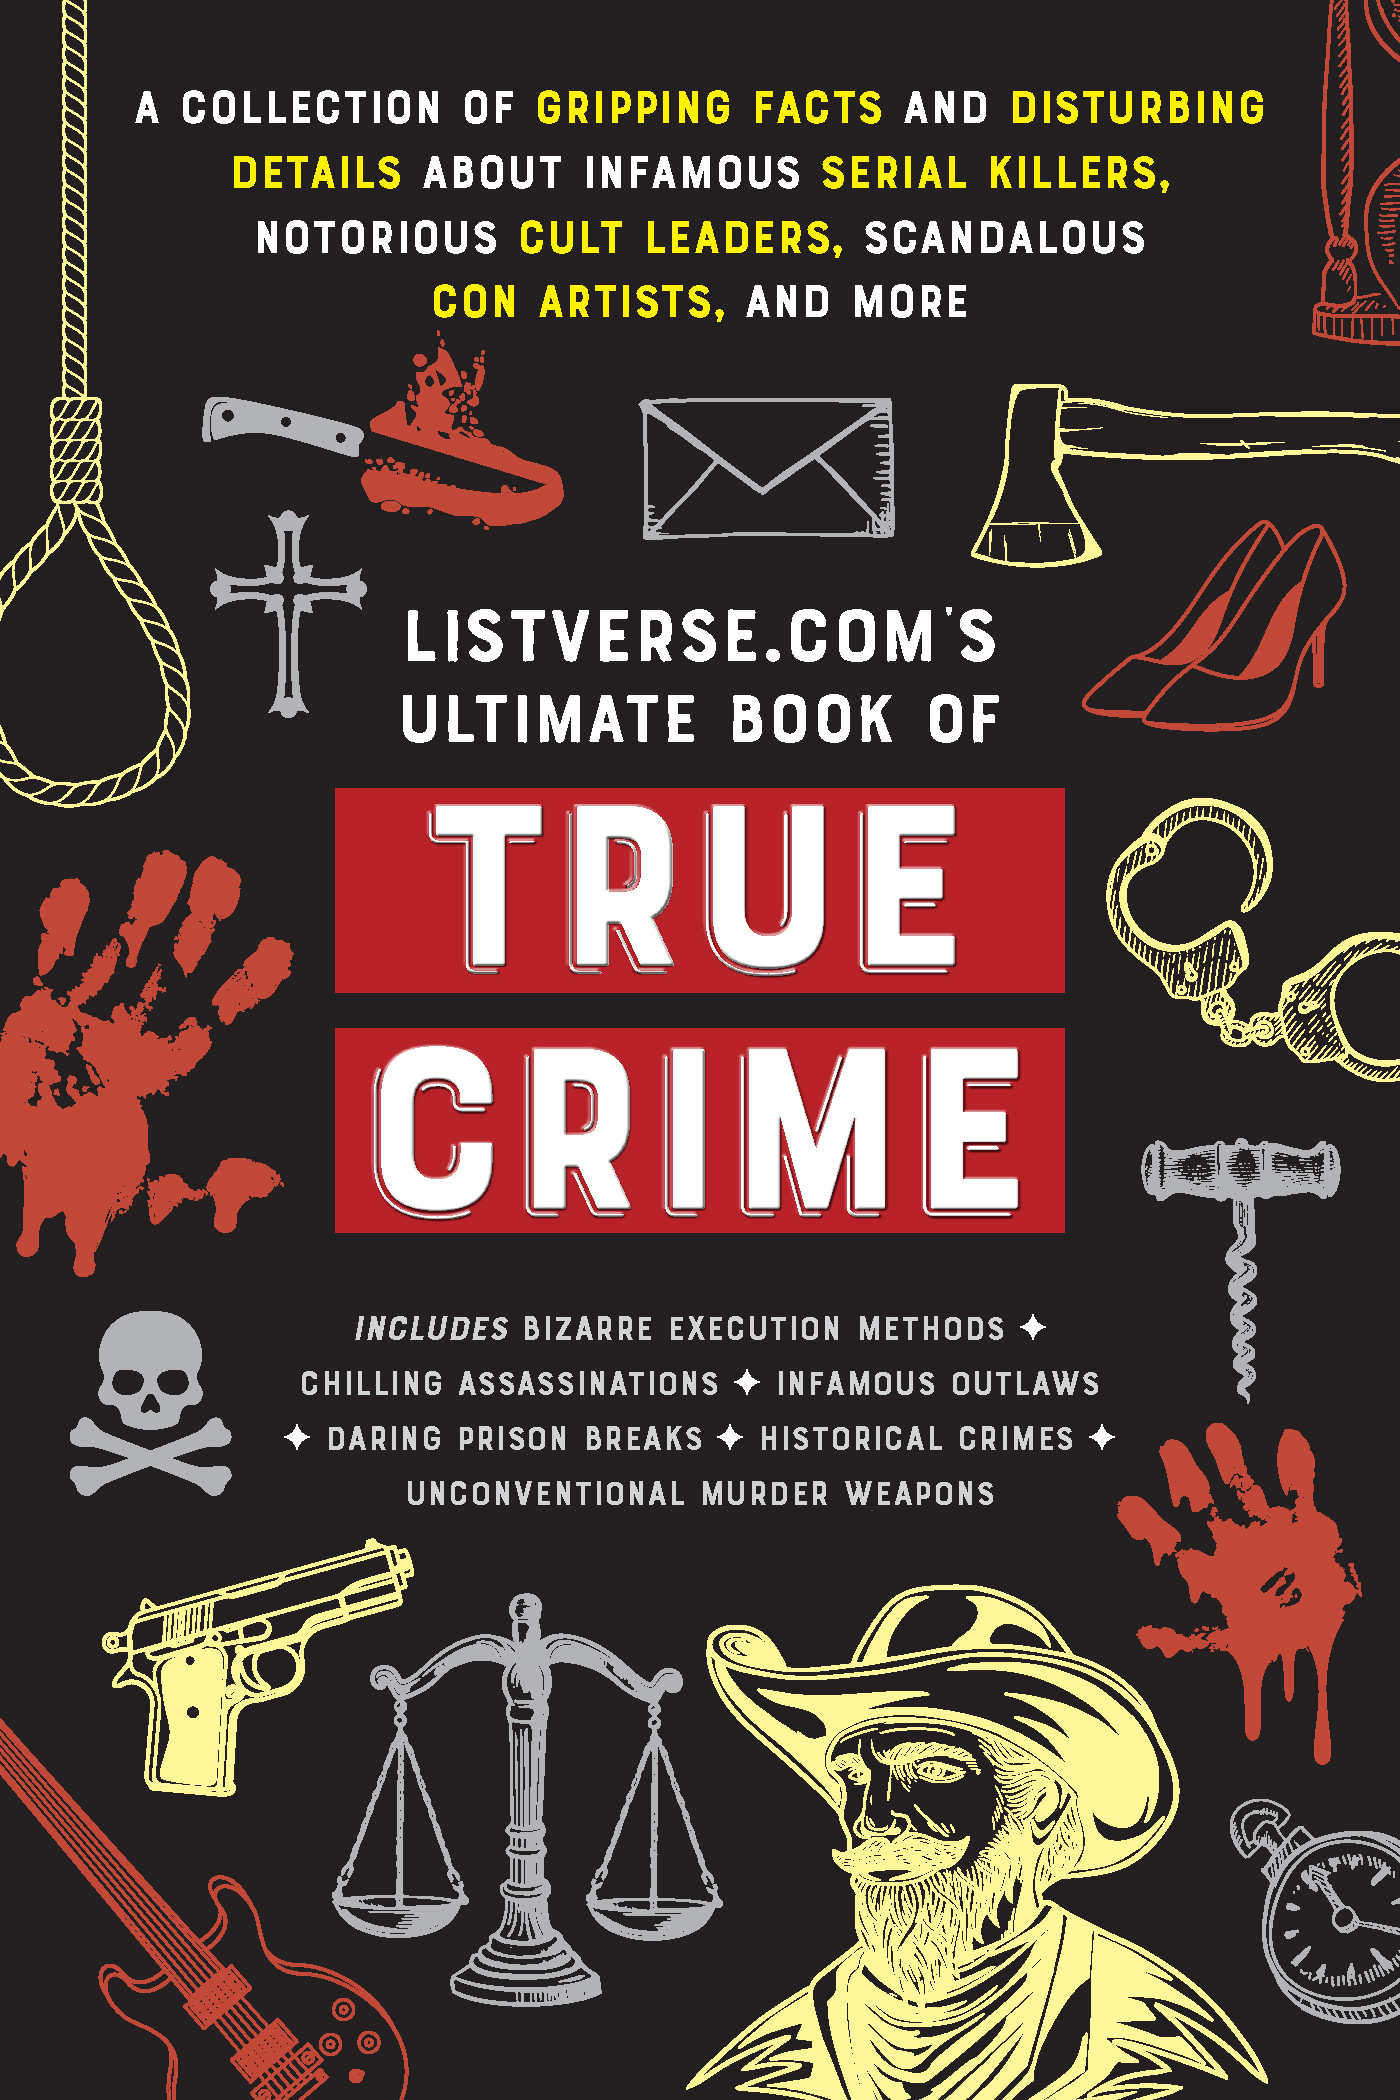 Listverses Ult Book True Crime-front.indd